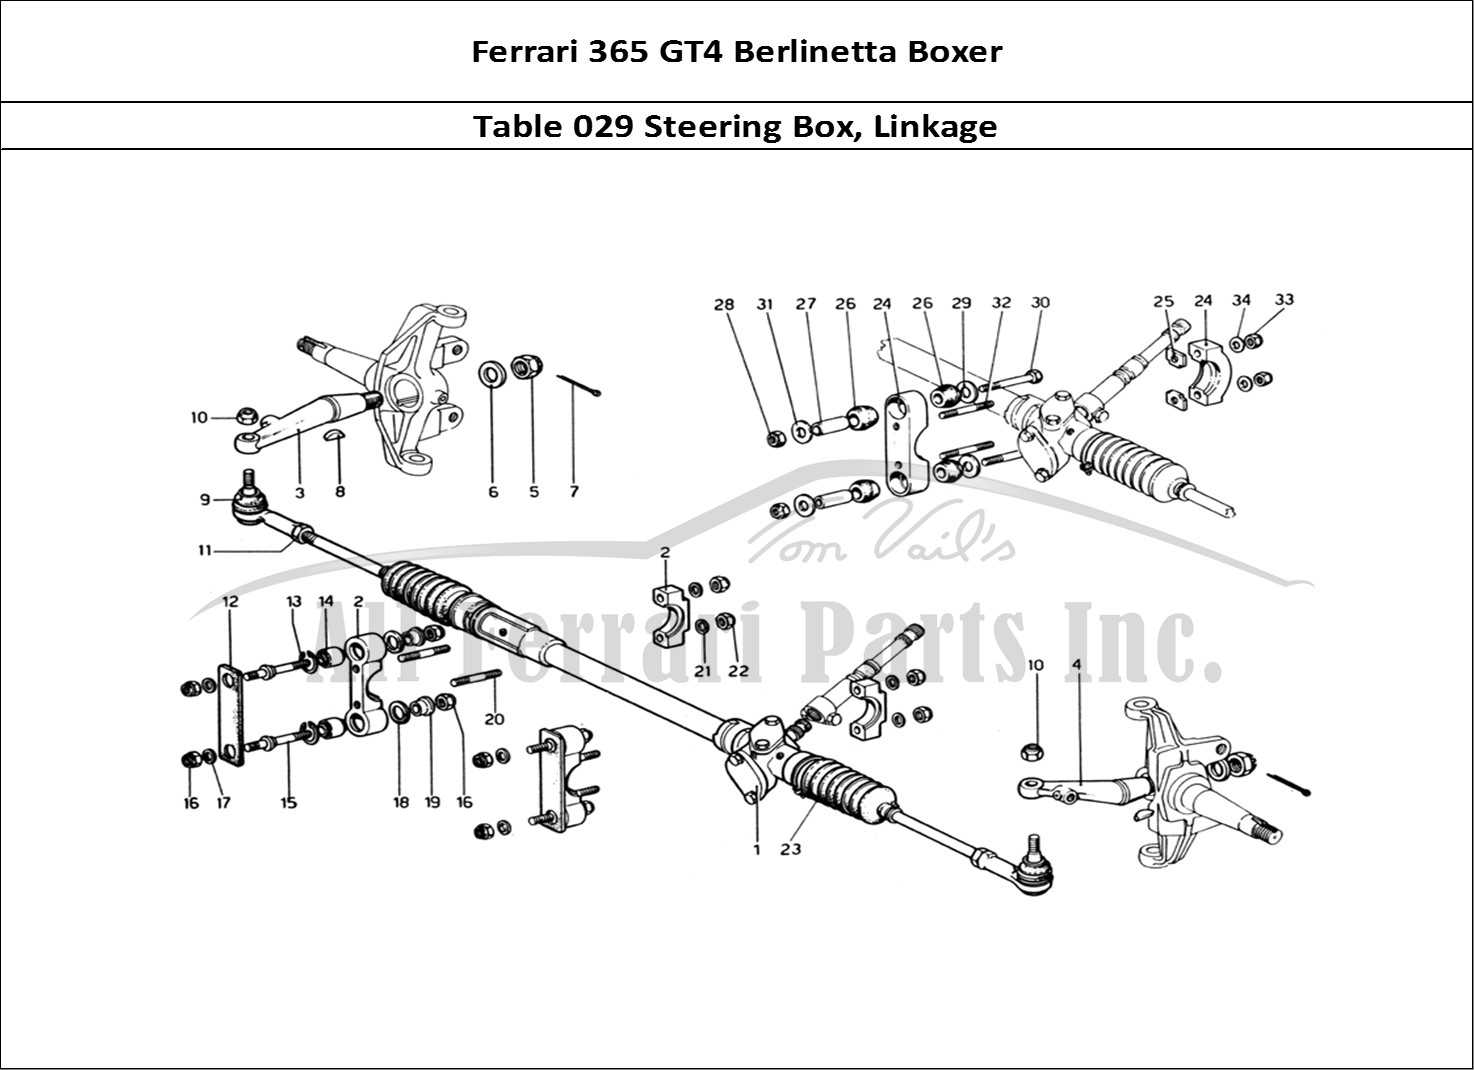 Ferrari Parts Ferrari 365 GT4 Berlinetta Boxer Page 029 Steering Box and Linkage